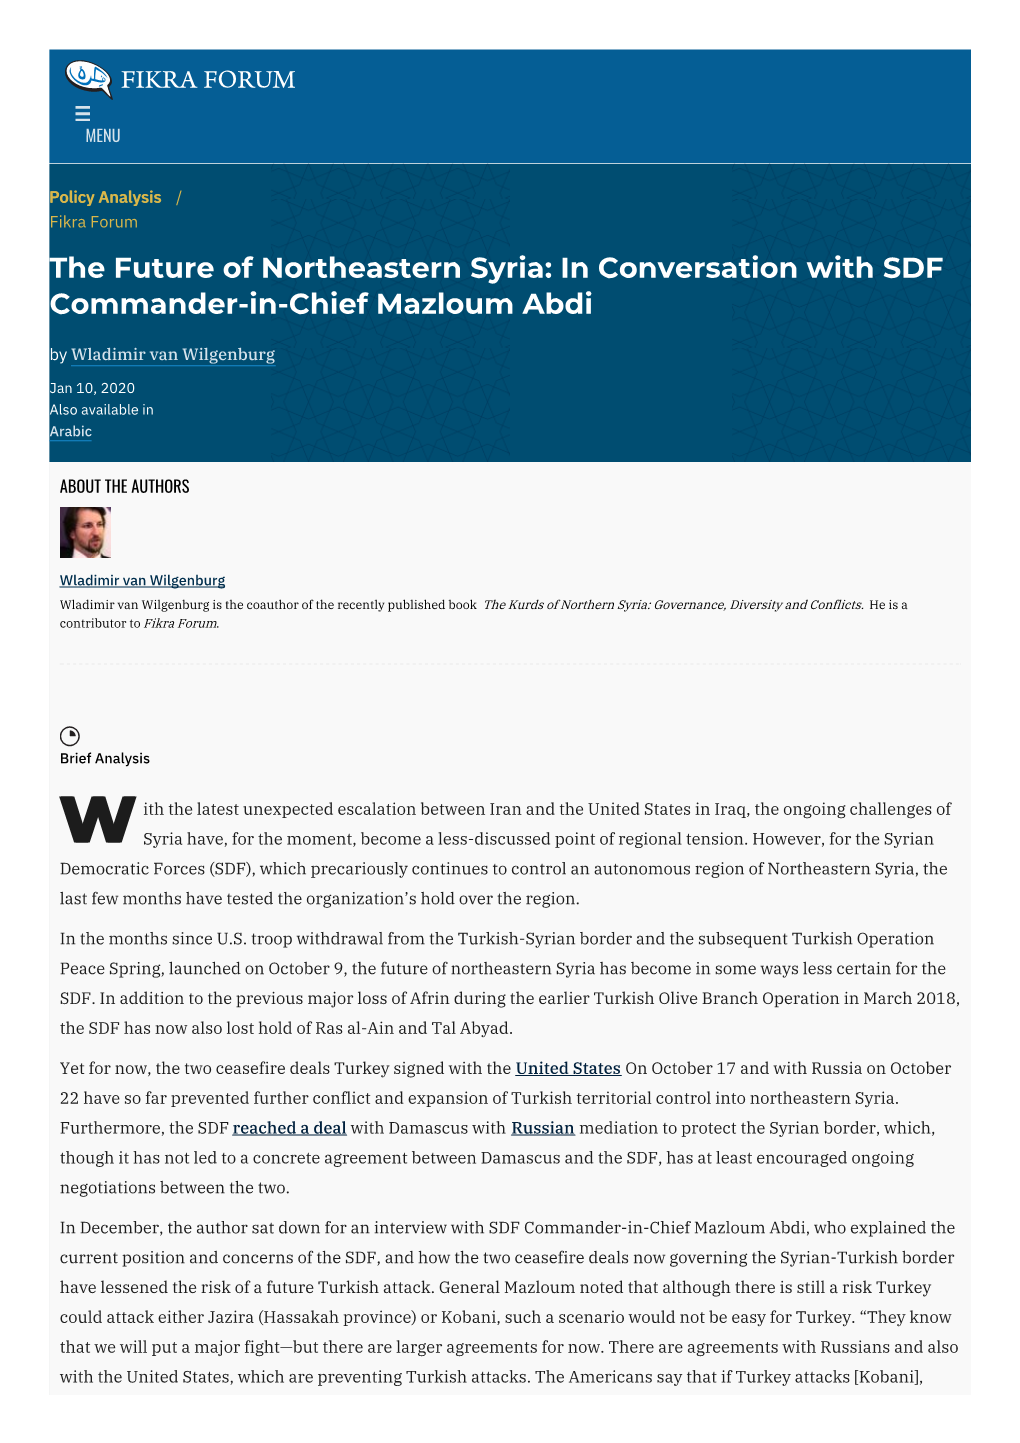 The Future of Northeastern Syria: in Conversation with SDF Commander-In-Chief Mazloum Abdi | the Washington Institute